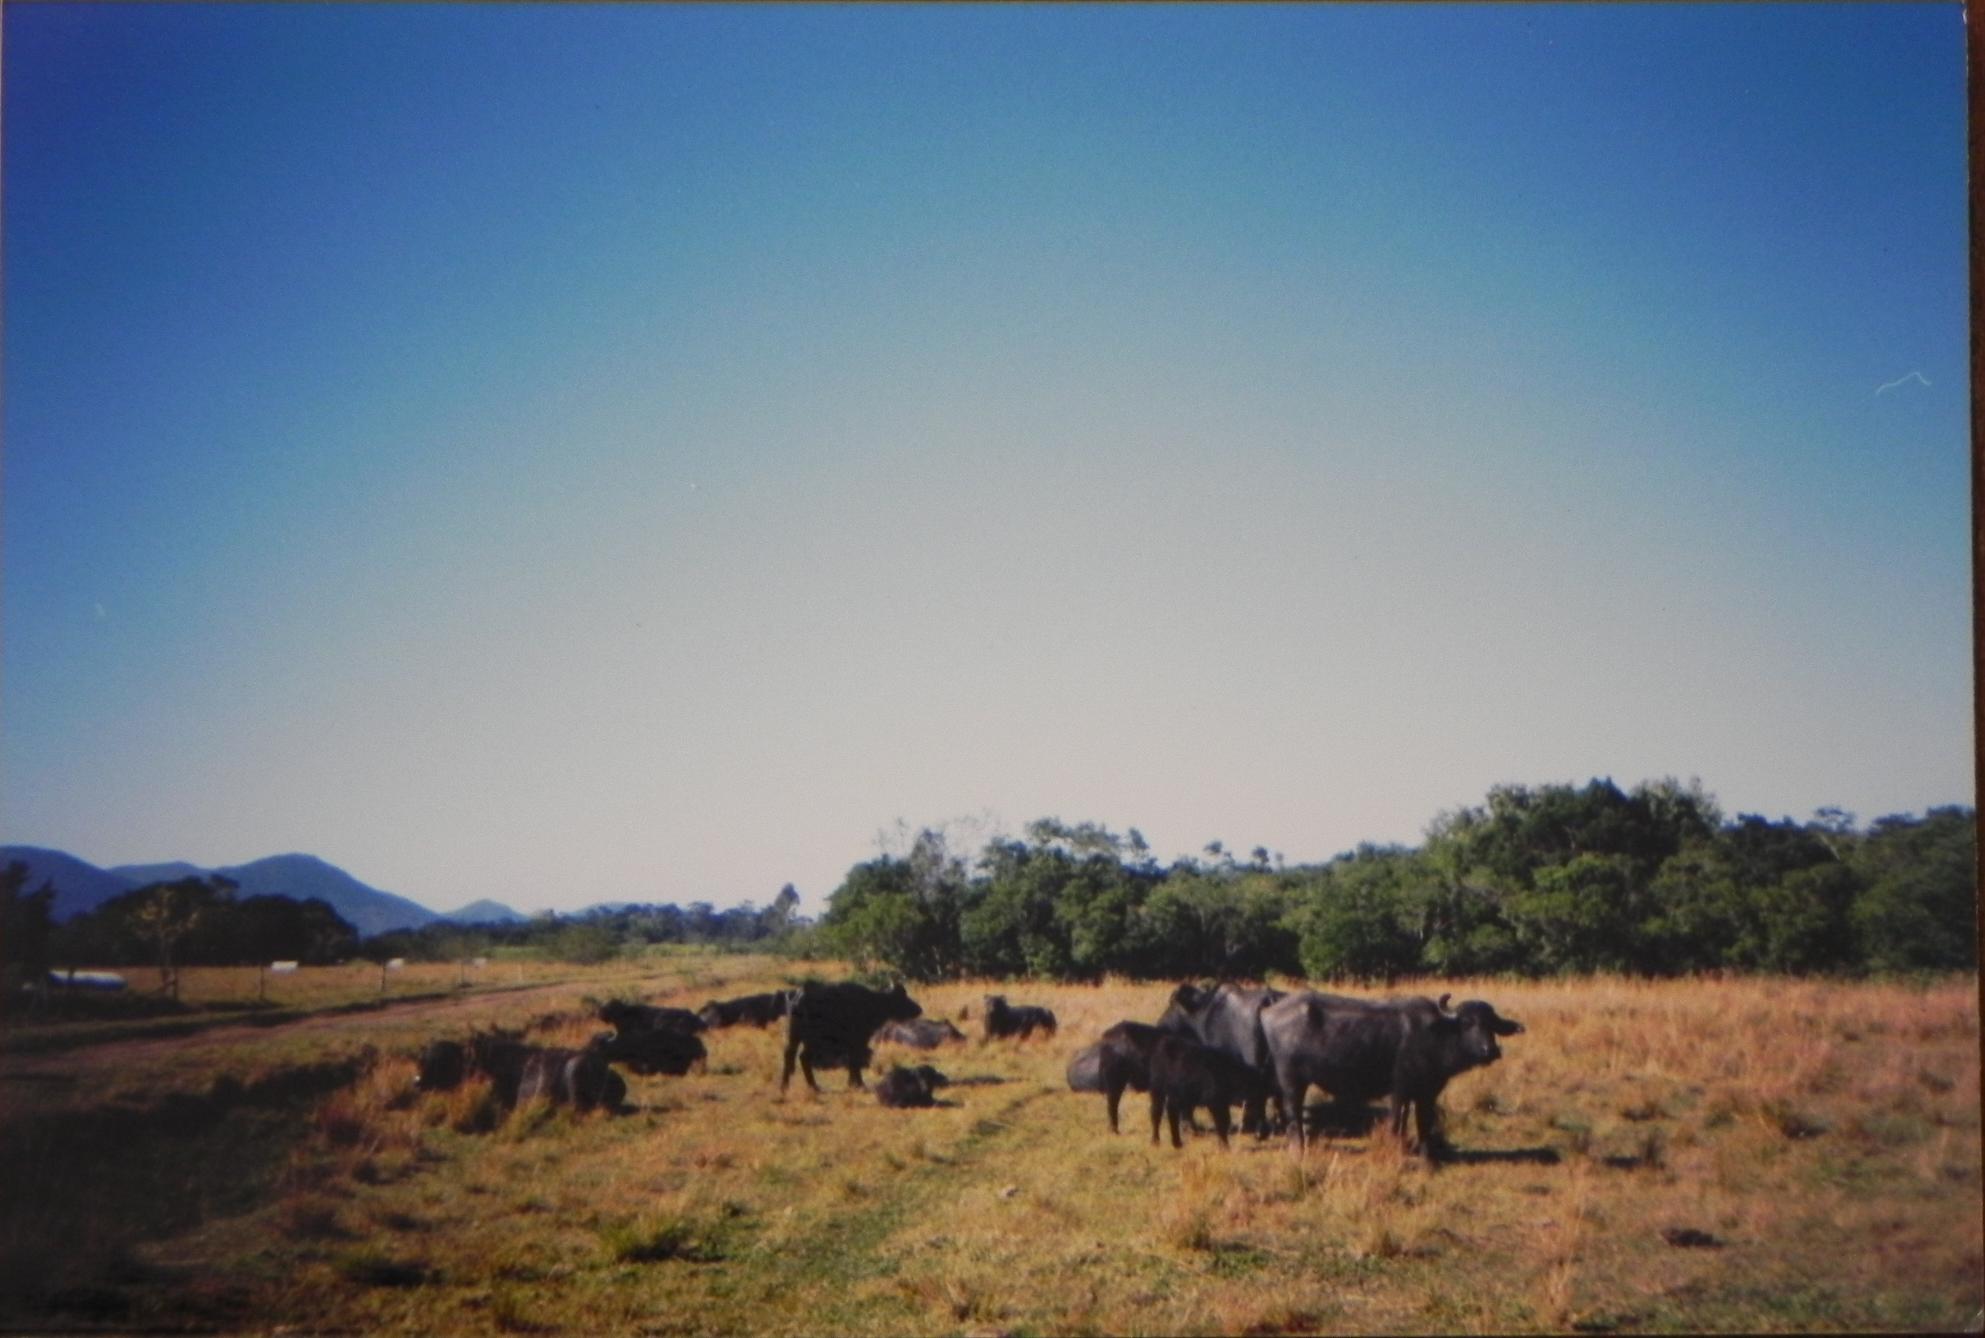 2000 Bufalos no local do cercado do mauricio.jpg